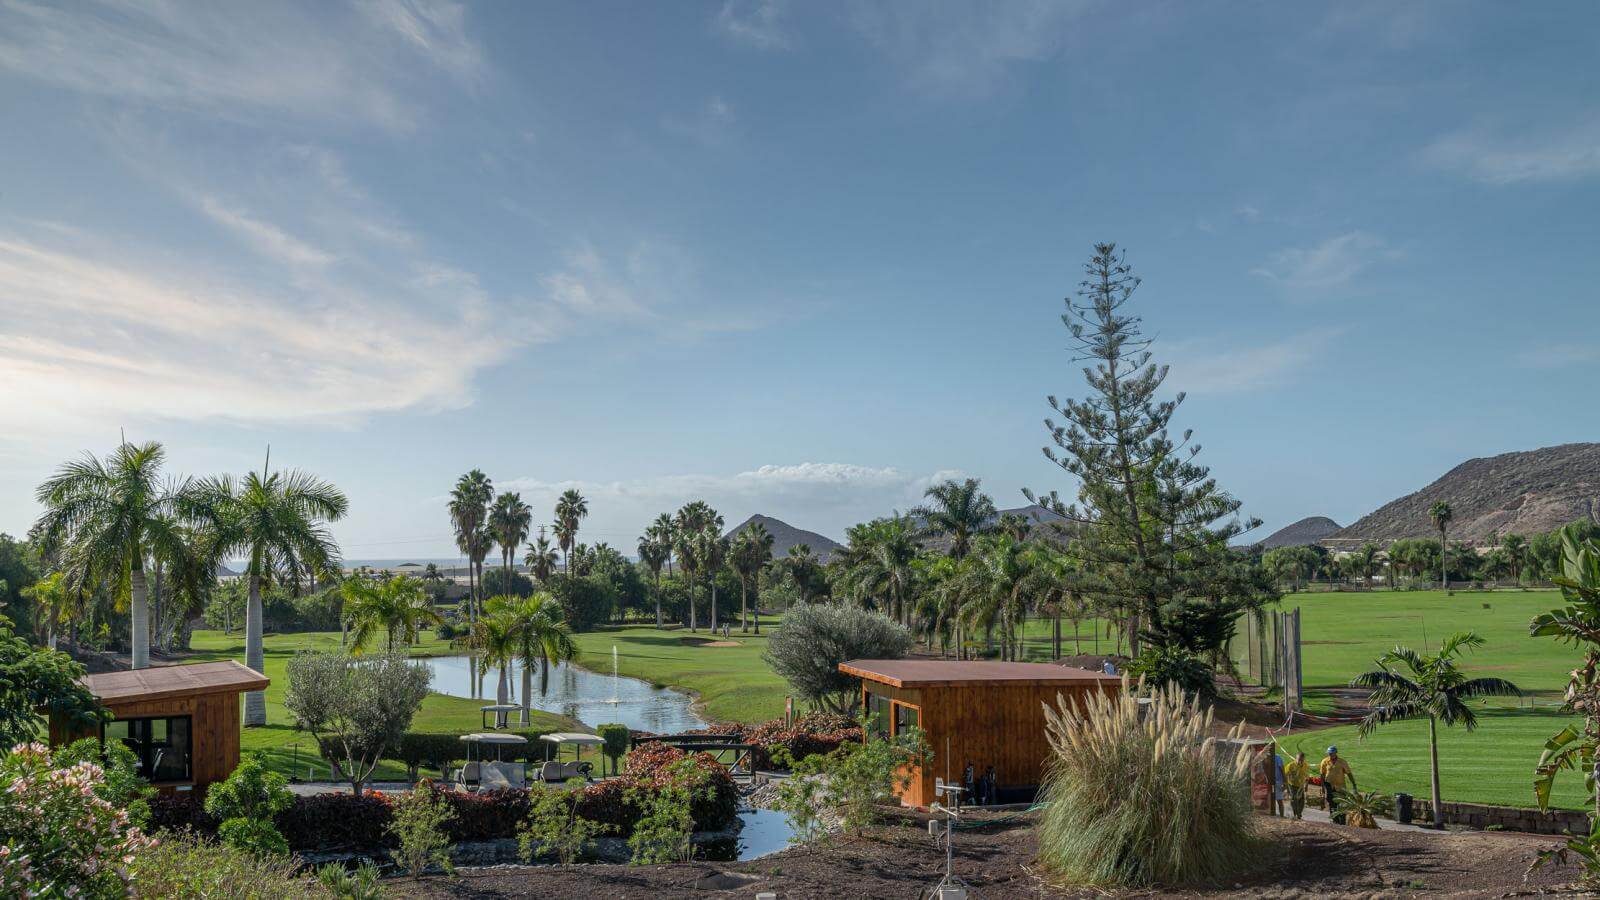 Campo de Golf en Tenerife